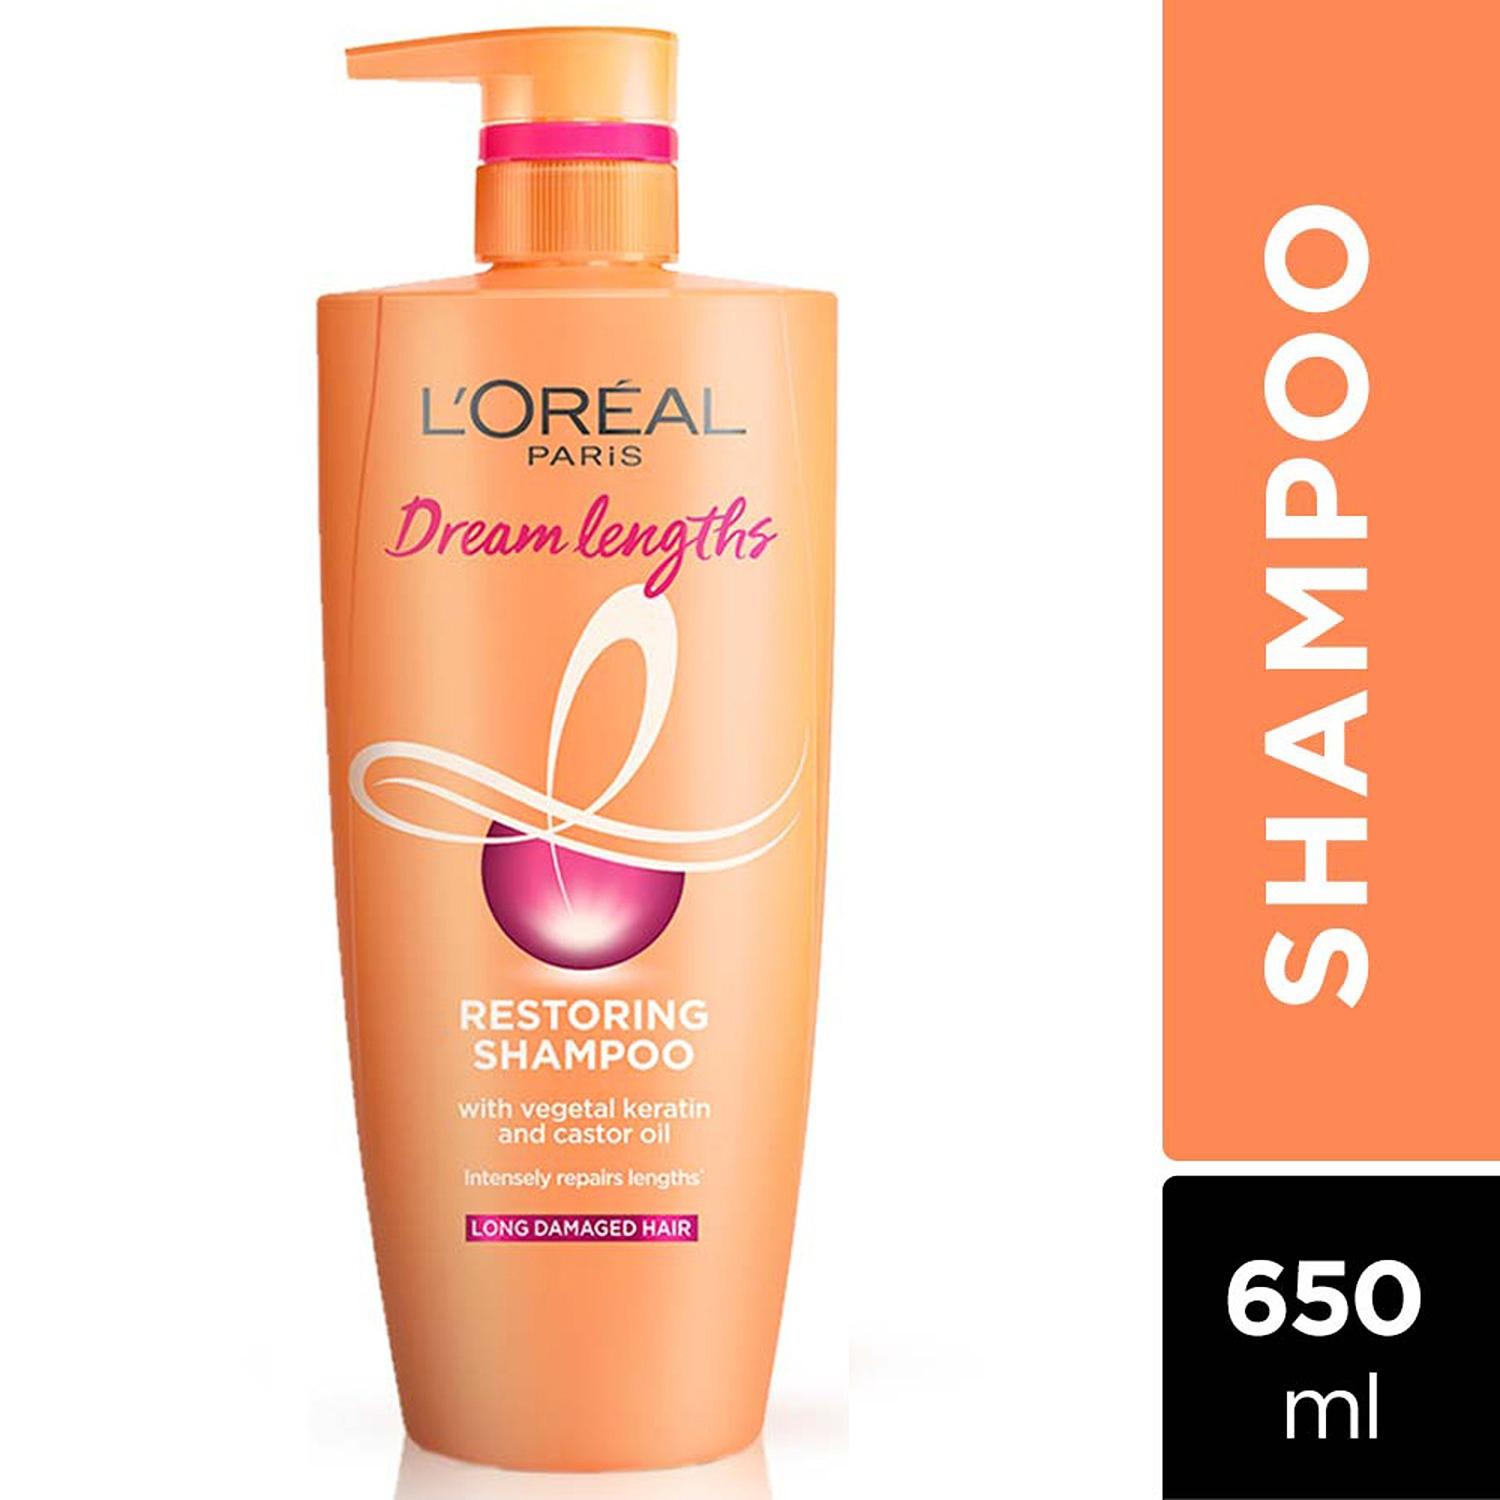 l'oreal-paris-dream-lengths-shampoo-(650-ml)